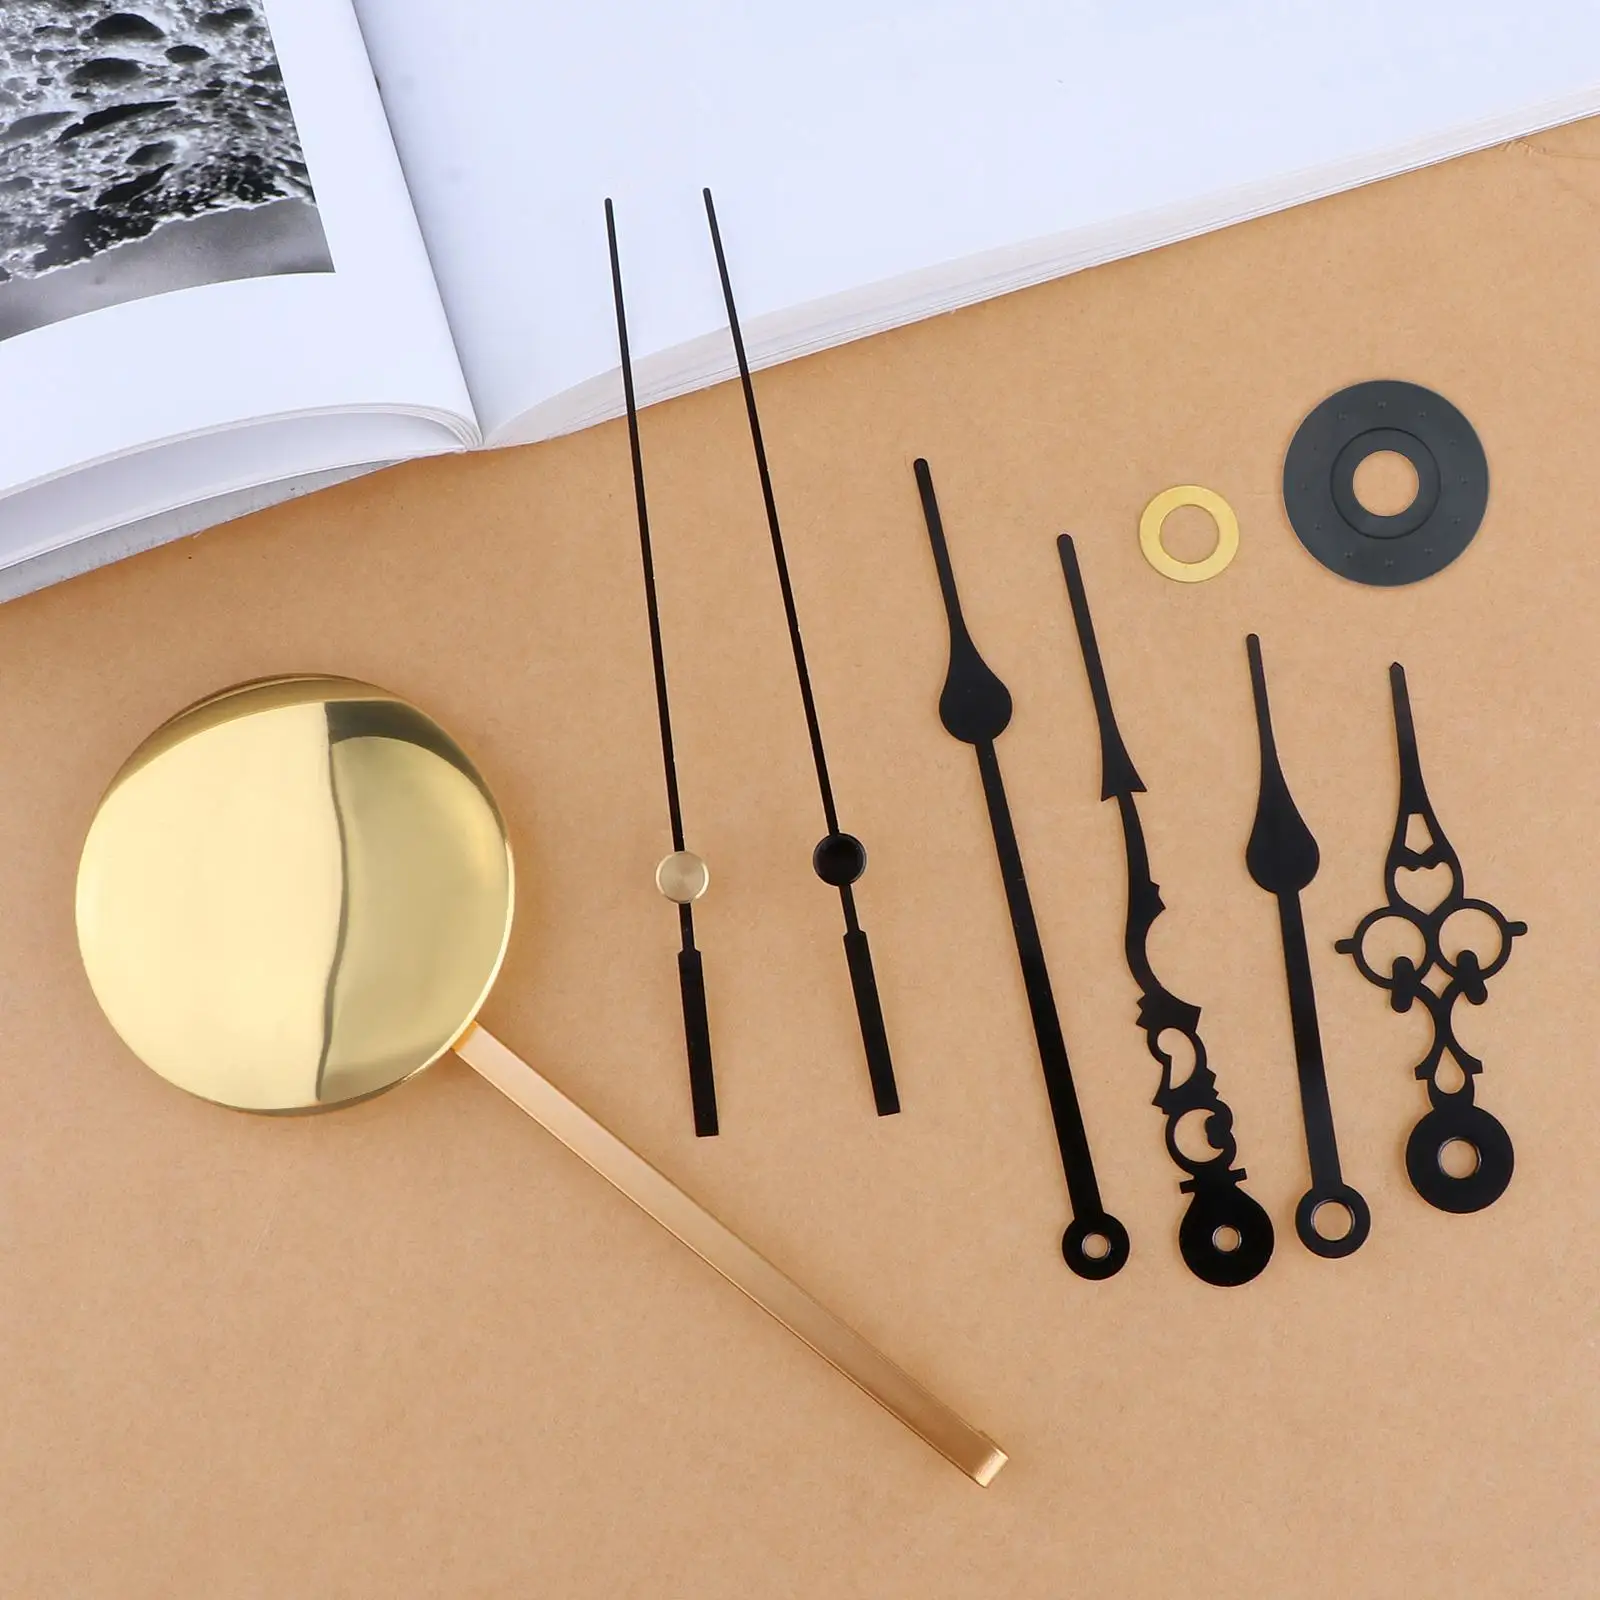 Wall Quartz Pendulum Clock  Music Box Mechanism Movement DIY Kit